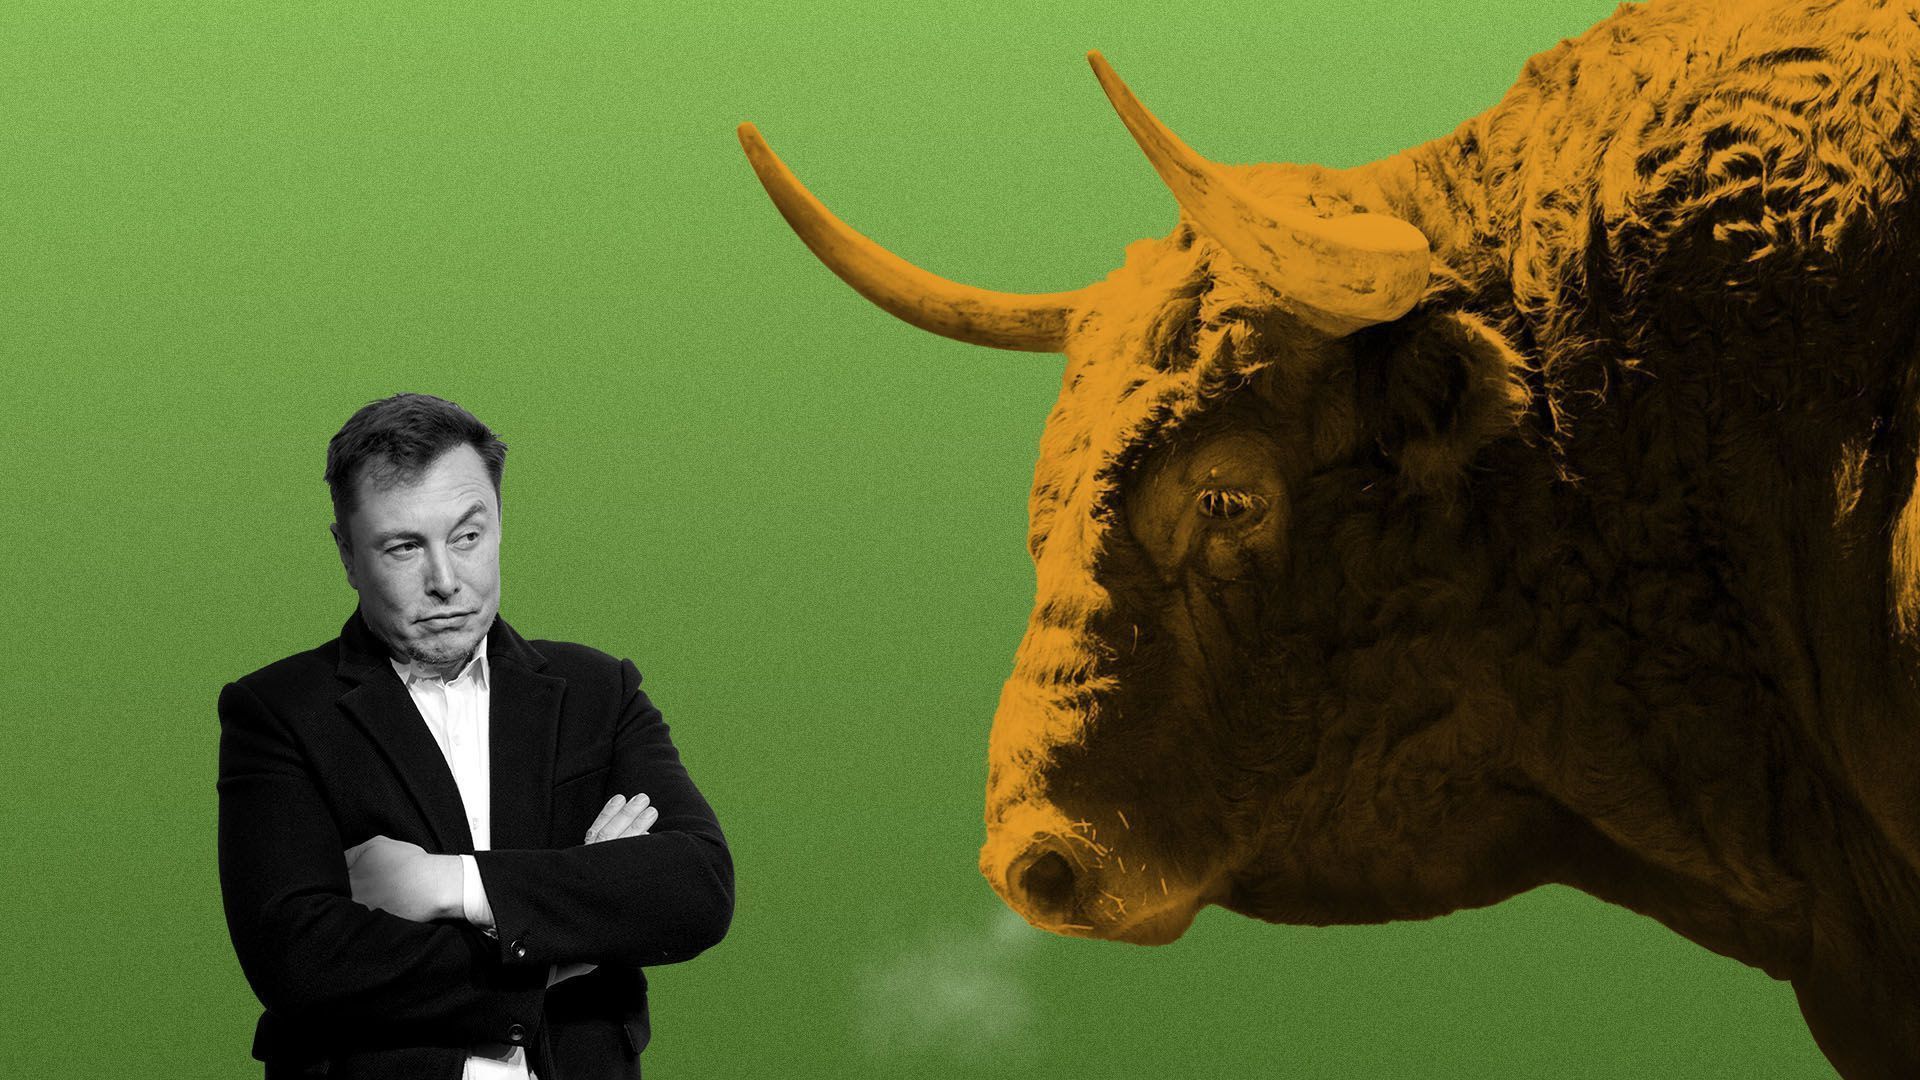 An illustration of Elon Musk next to a bull.